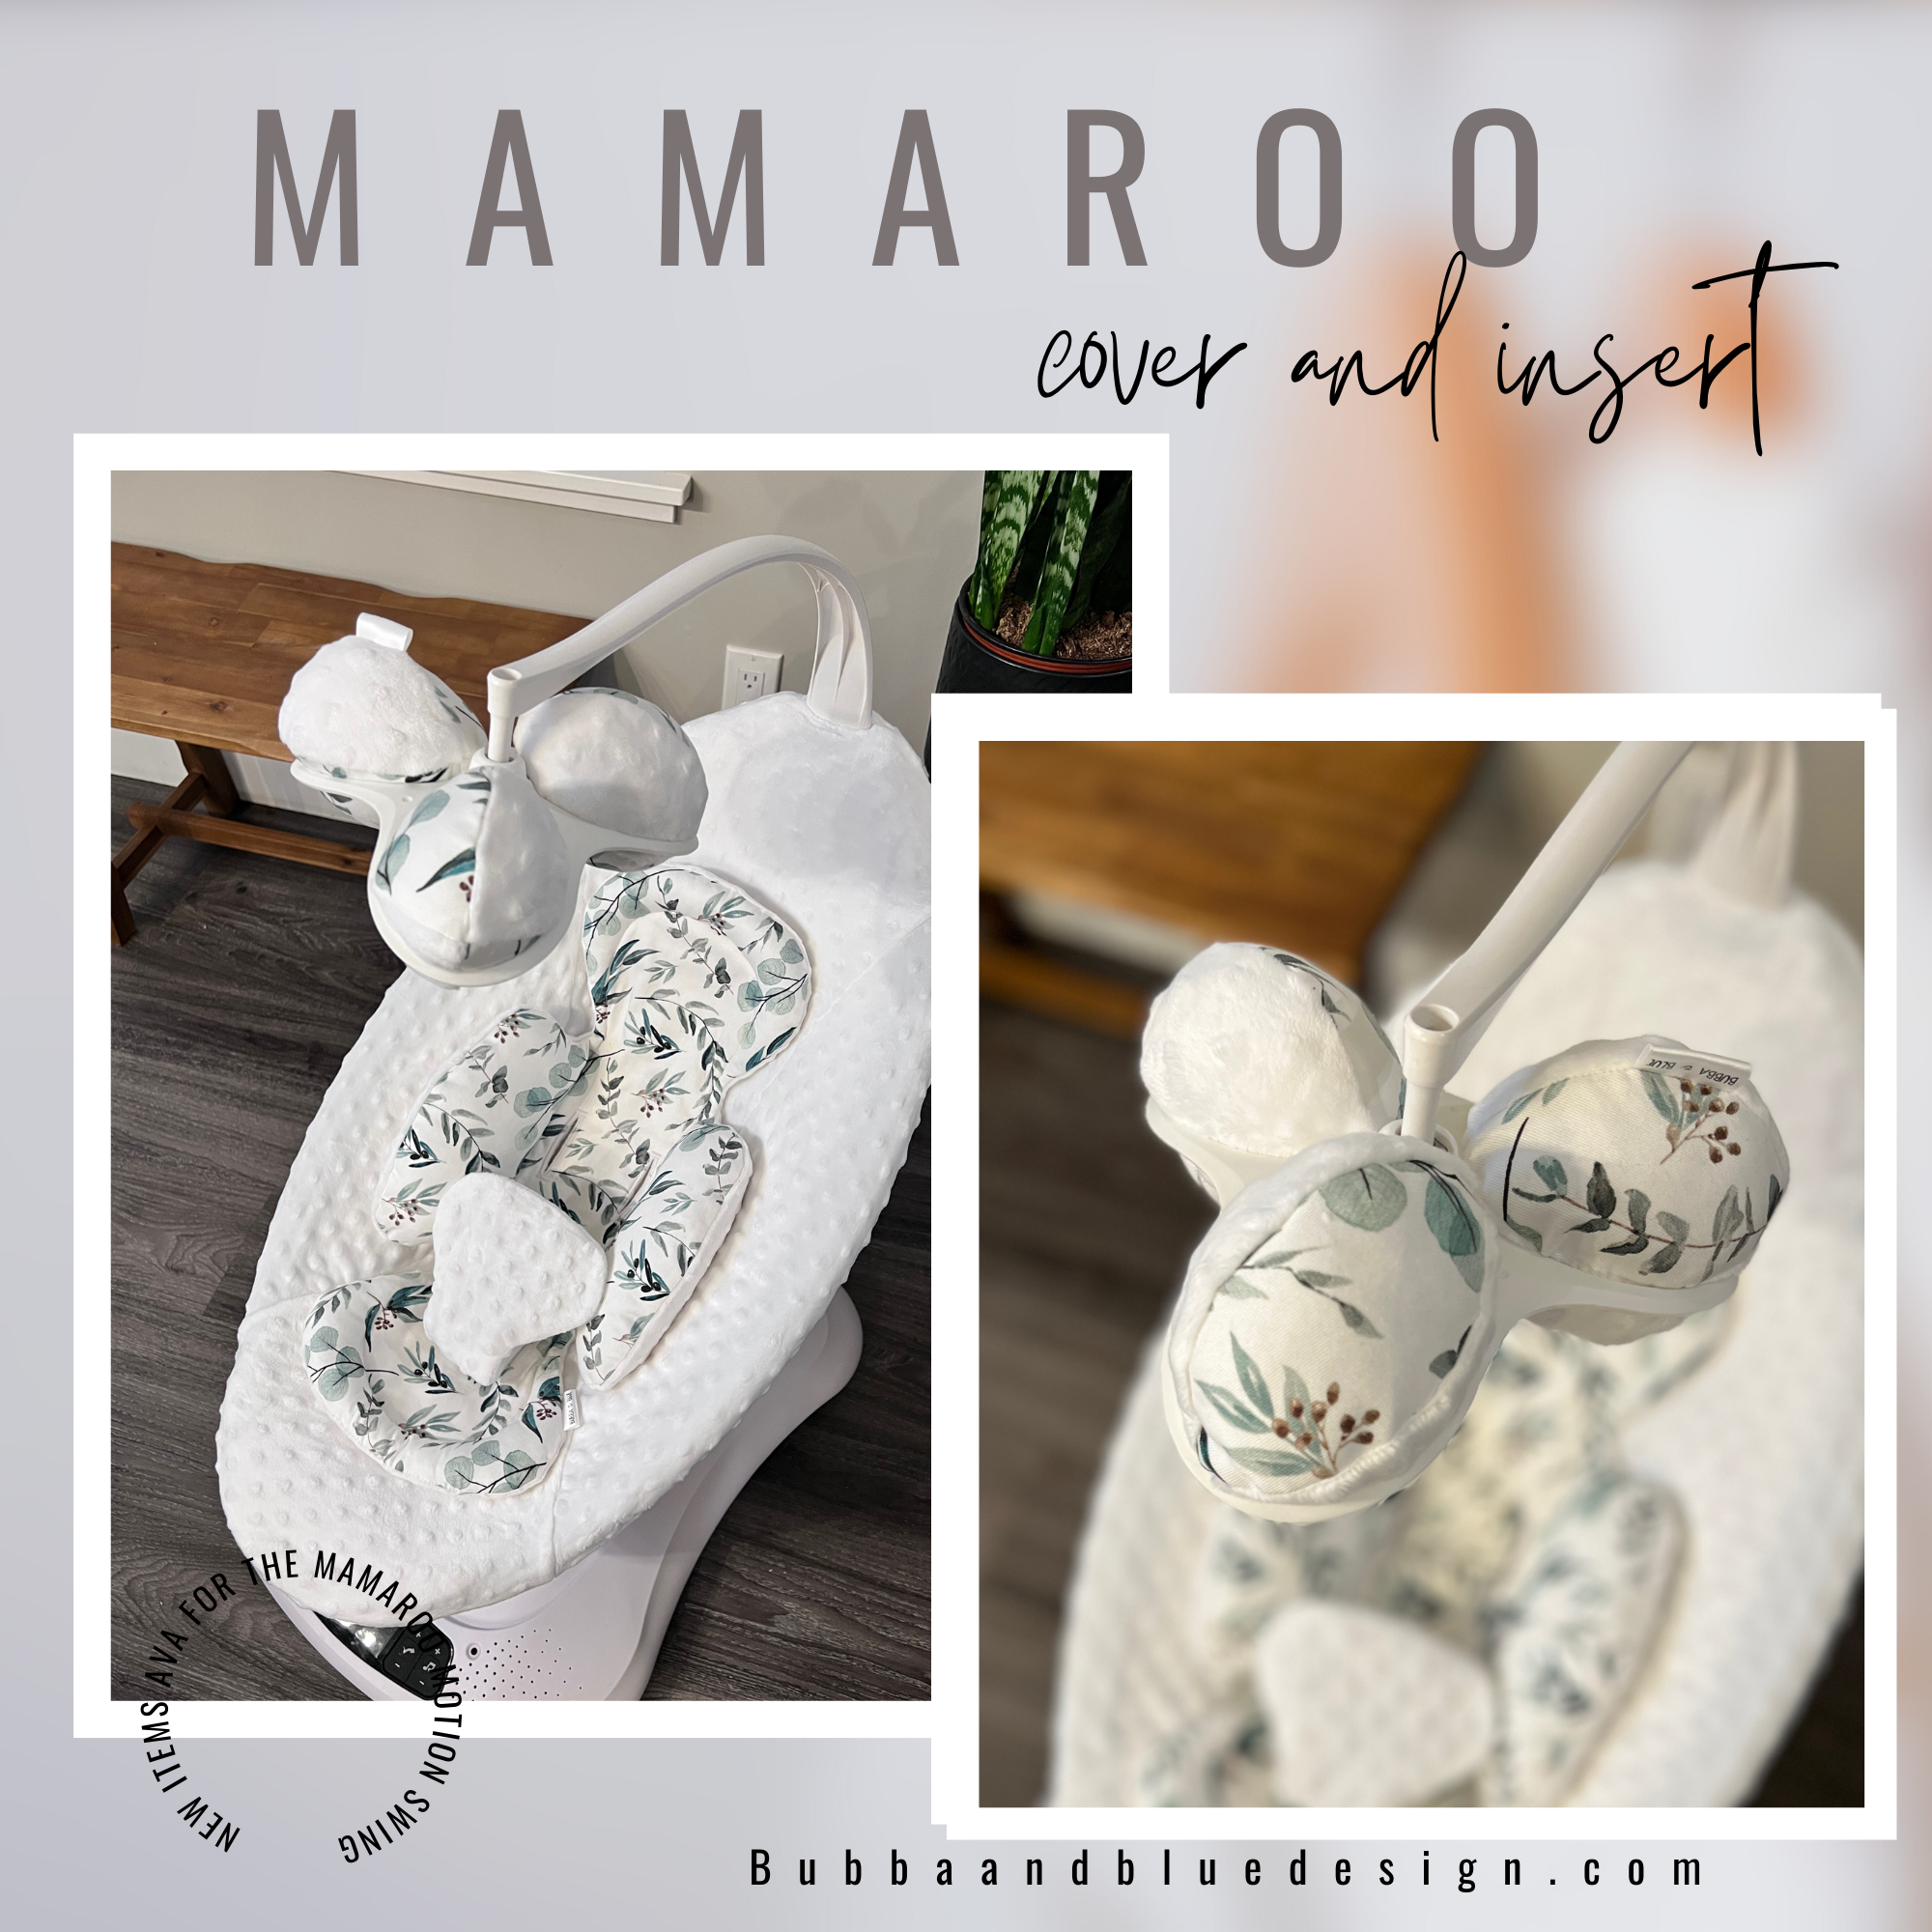 Mamaroo cover, newborn insert and balls in eucalyptus